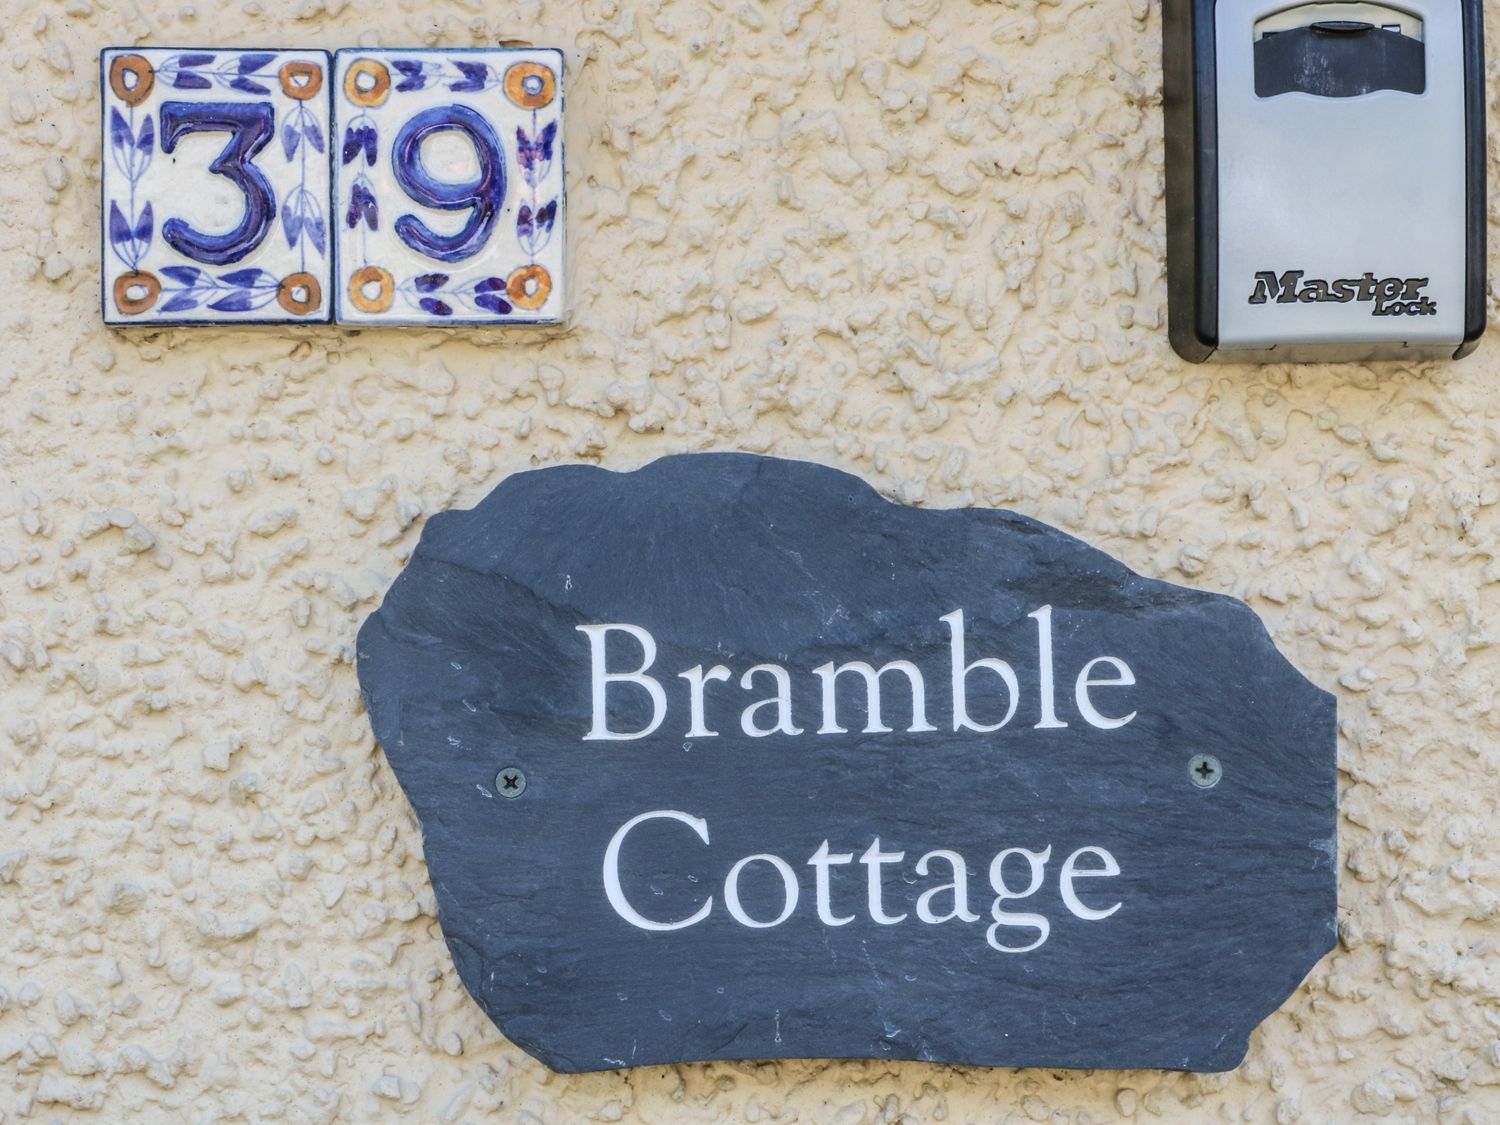 Bramble Cottage, Sedbergh